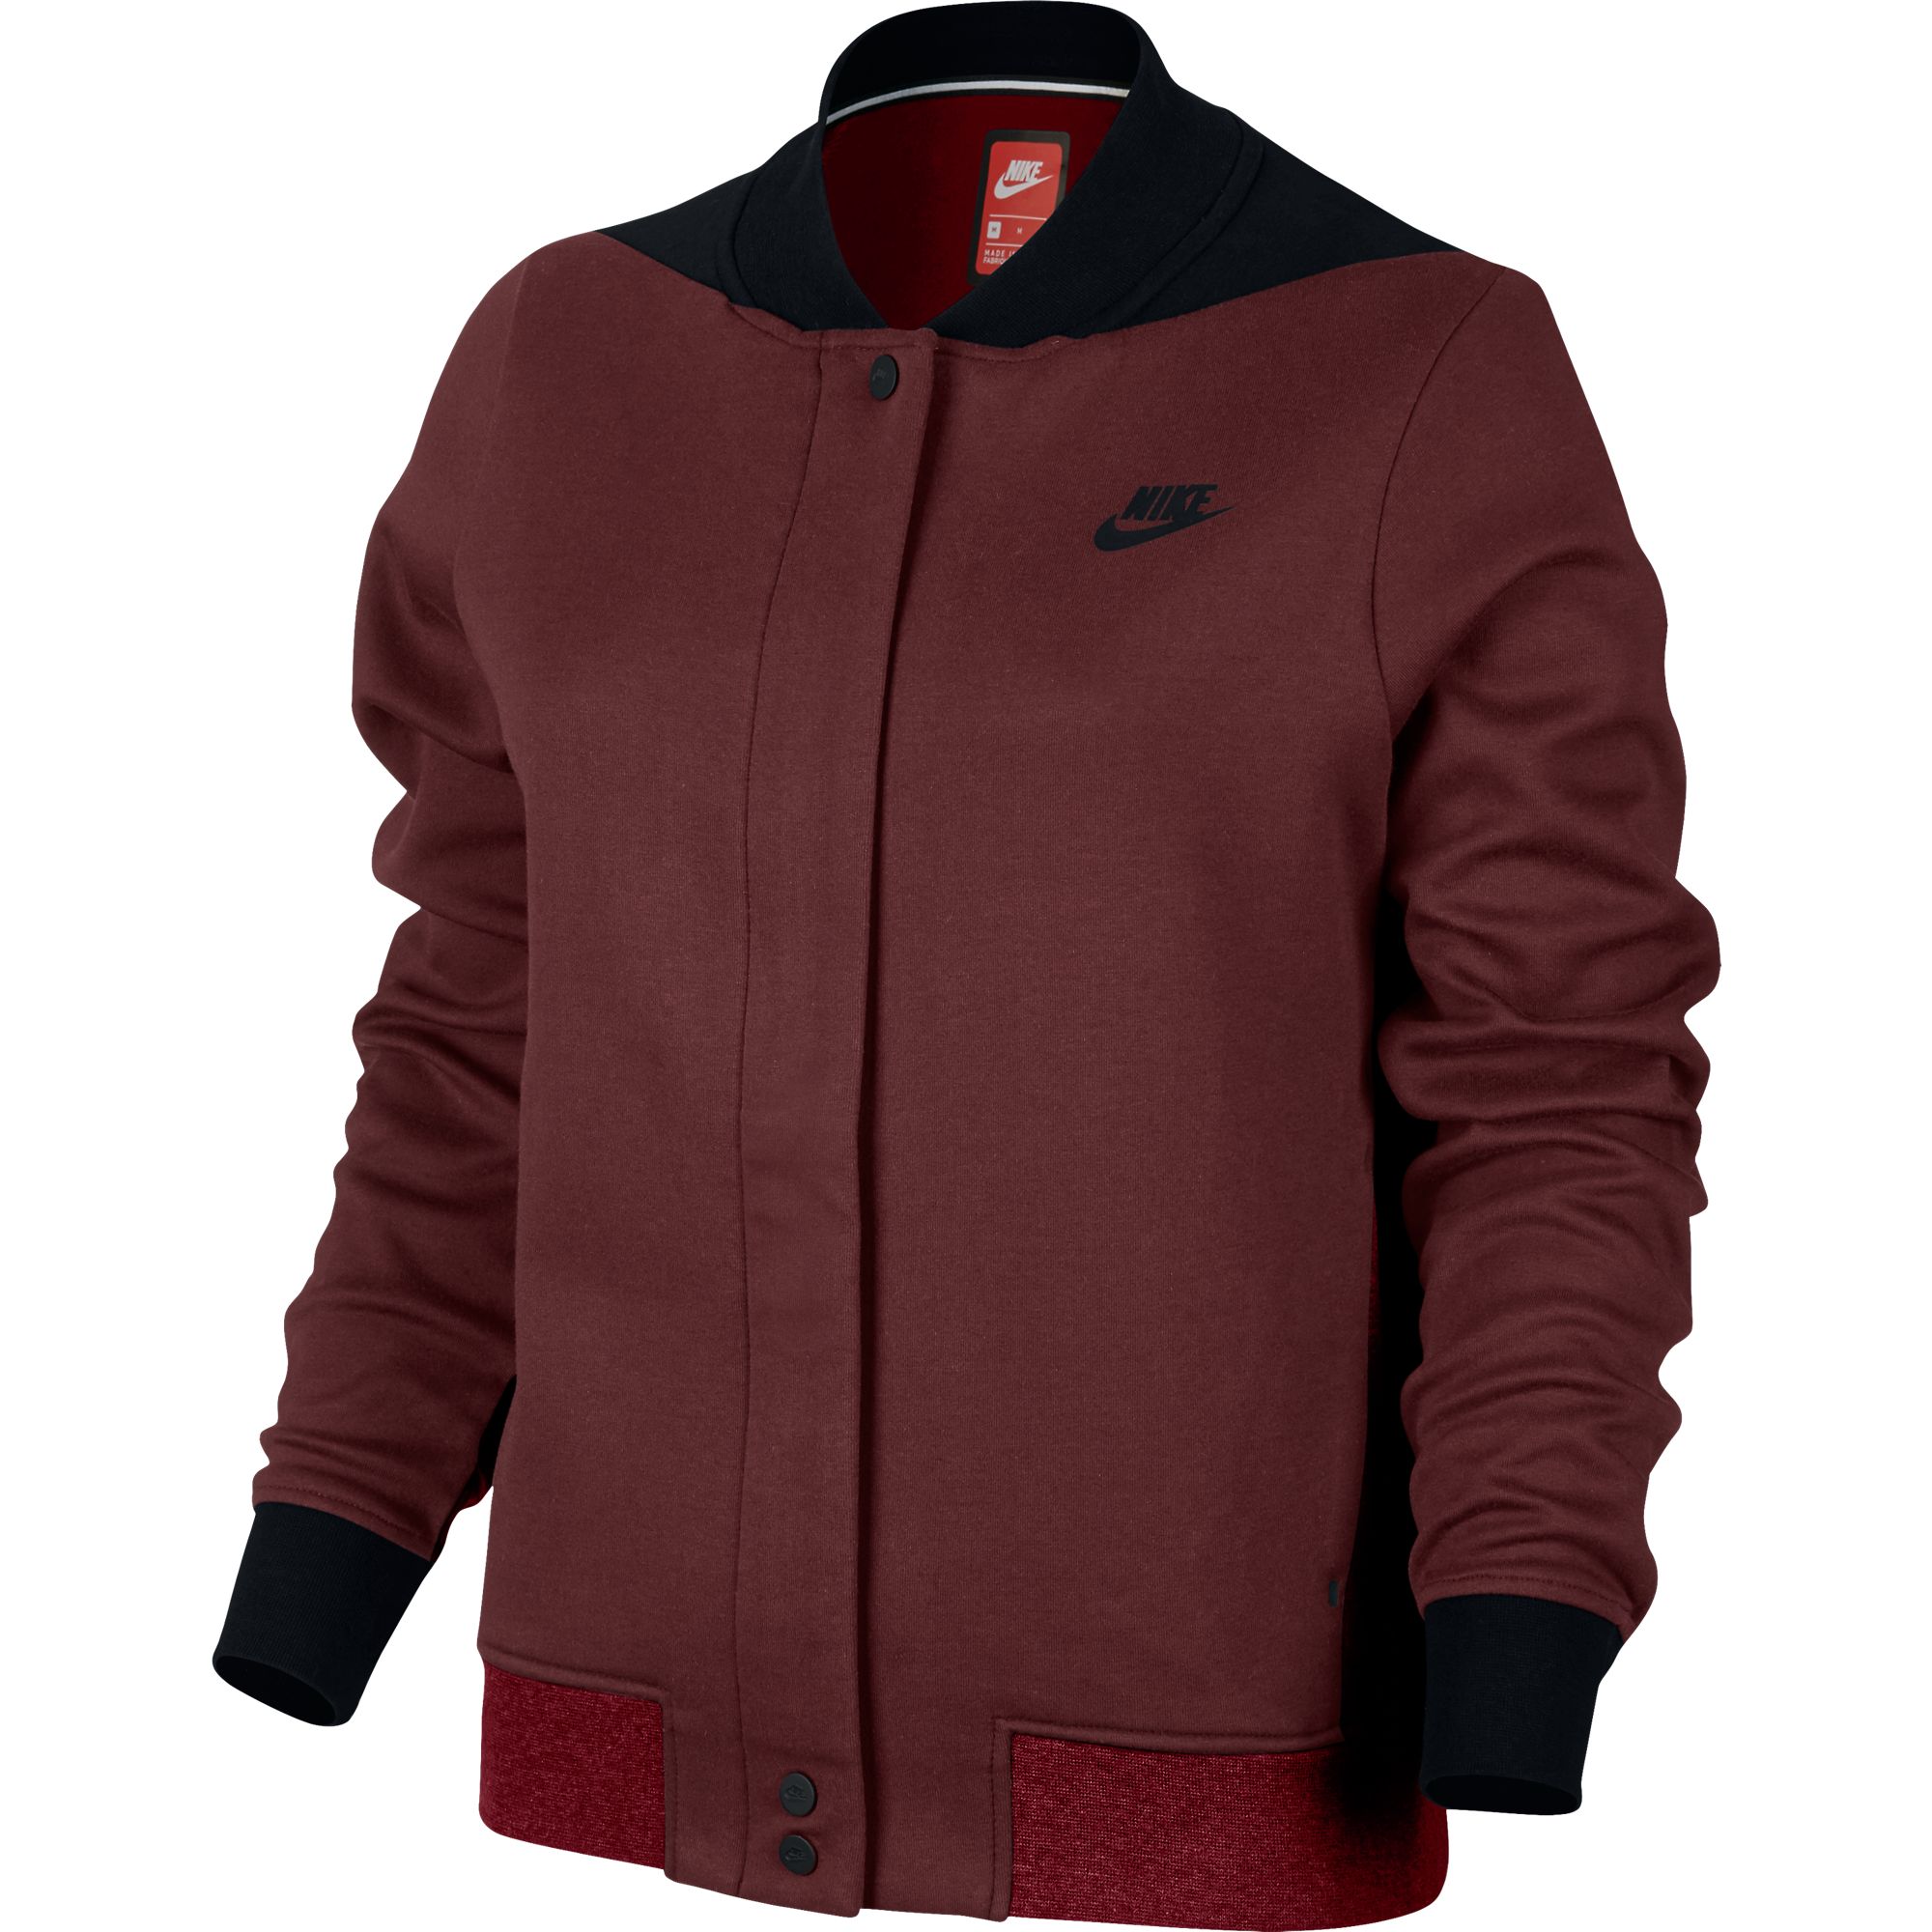 Nike Tech Fleece Destroyer Women's Jacket Burgundy 884427-608 - image 1 of 2